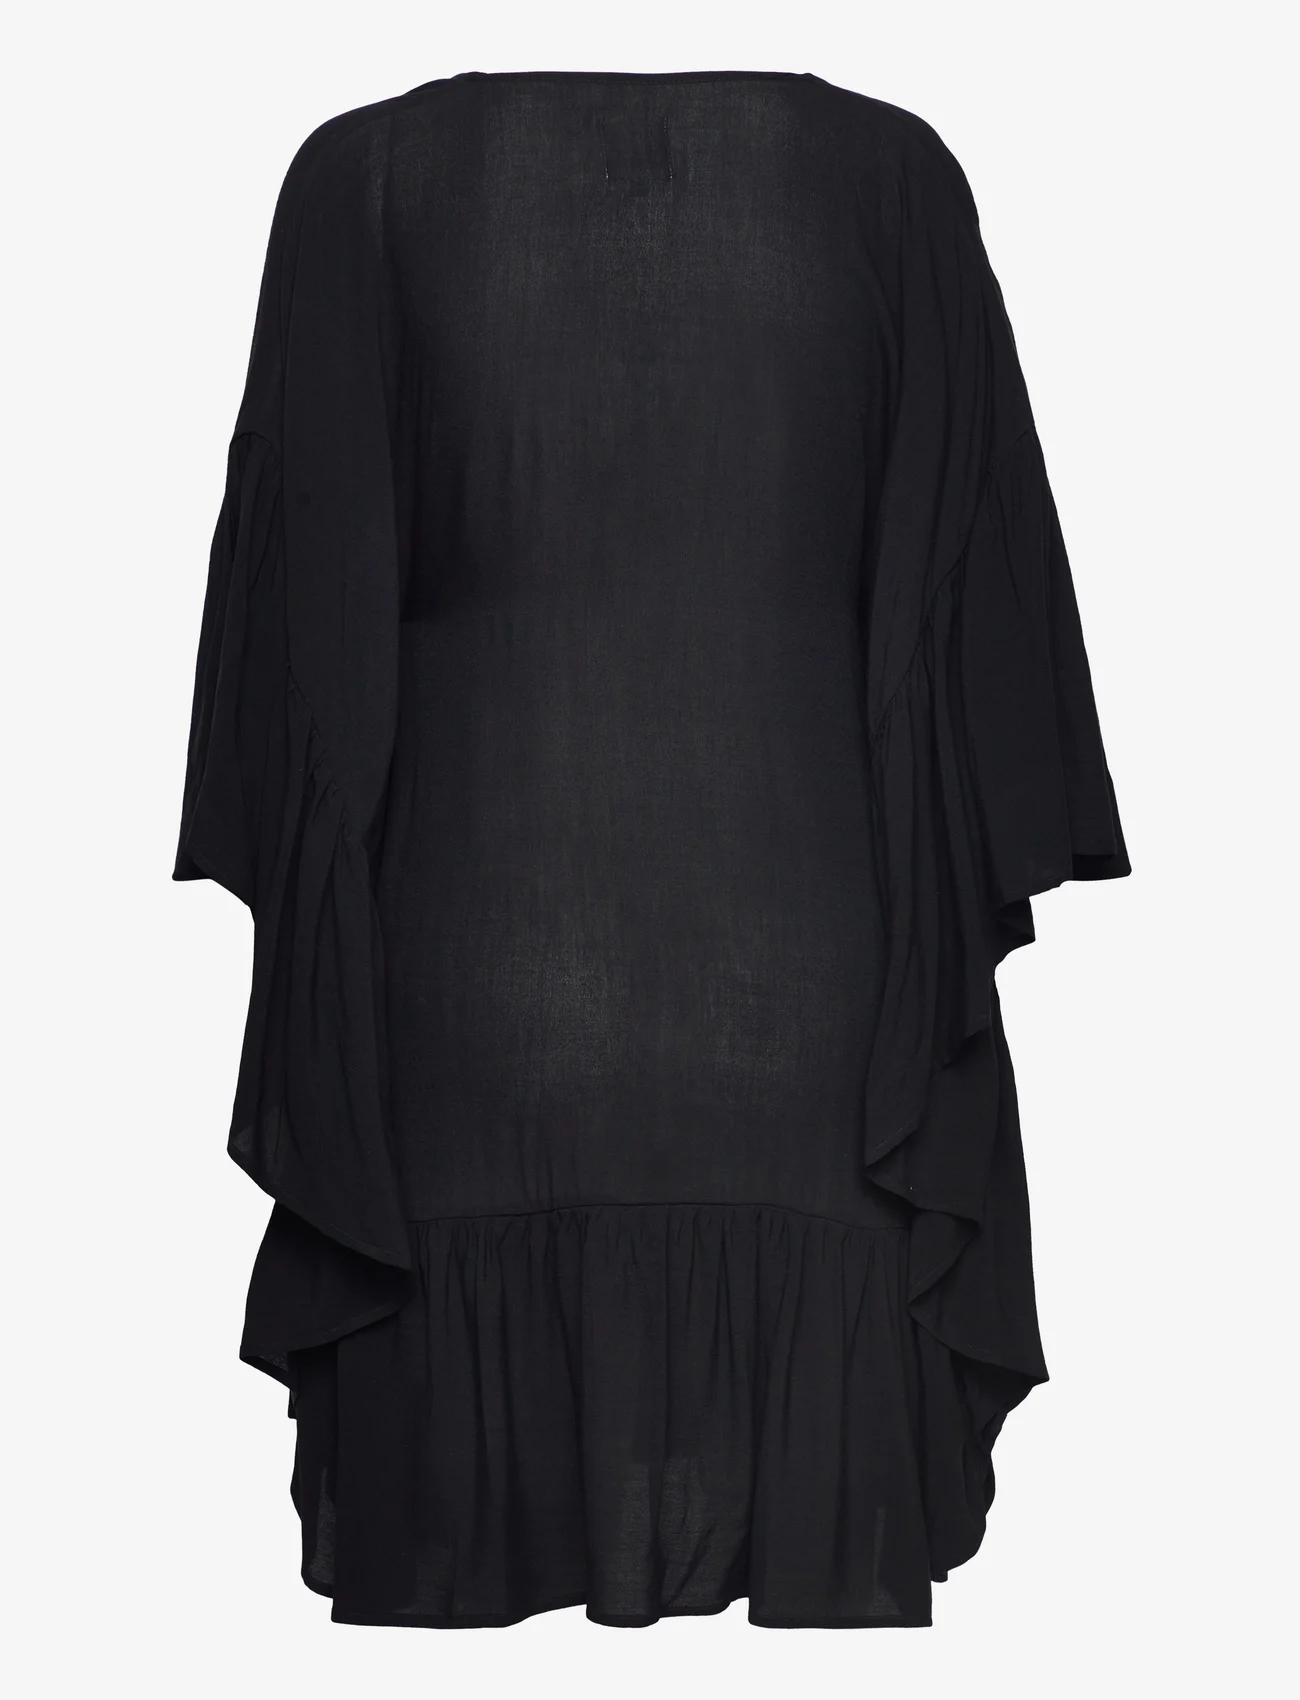 hálo - USVA FRILL KAFTAN DRESS - strandtøj - black - 1